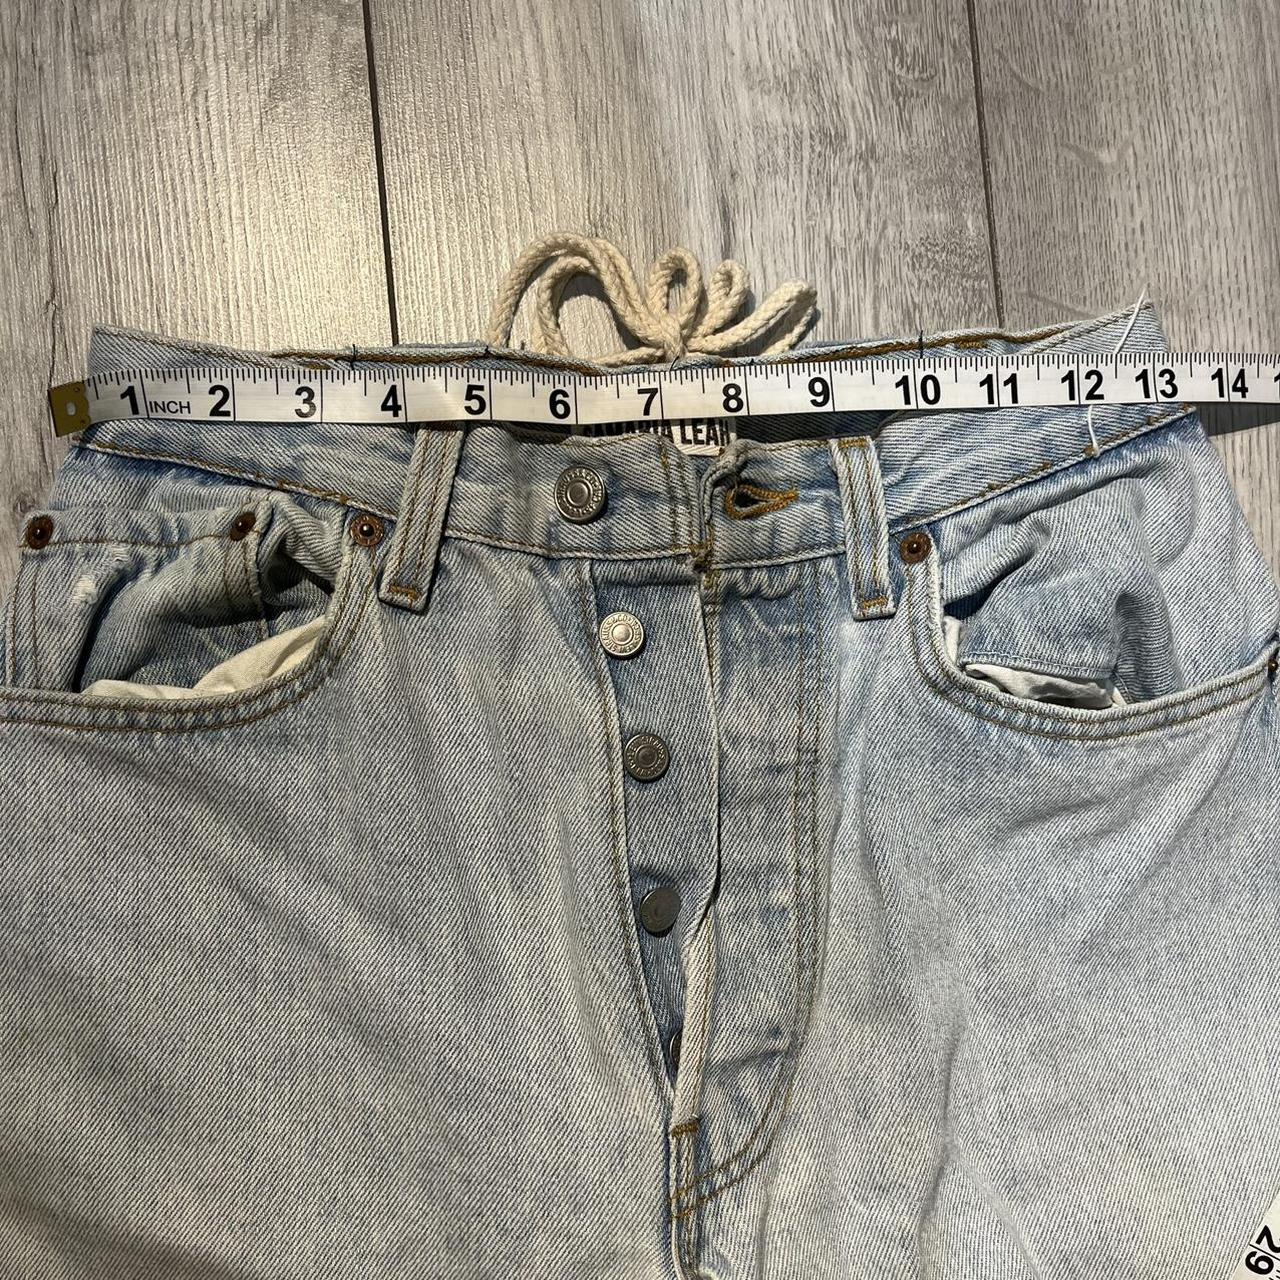 Samaria Leah light blue vintage levi’s jeans 13”... - Depop